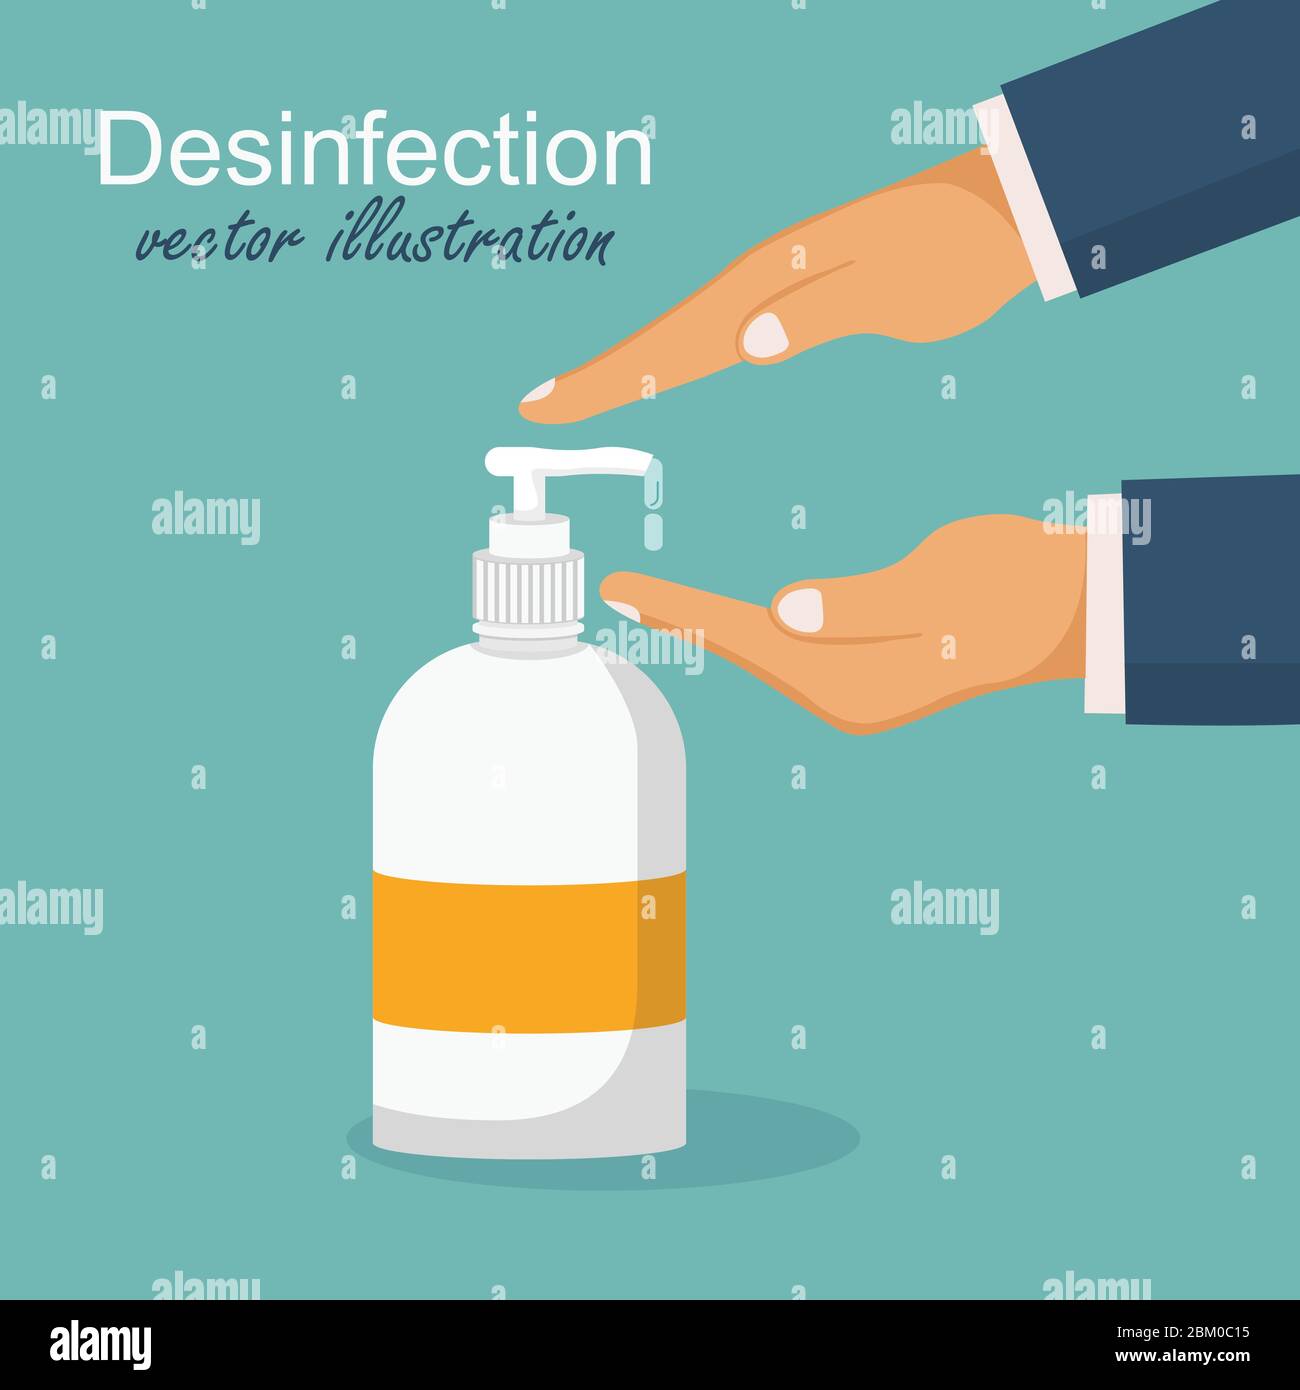 Desinfection concept. Man washing hands. Vector illustration in flat design. Applying a moisturizing sanitizer. Stock Vector